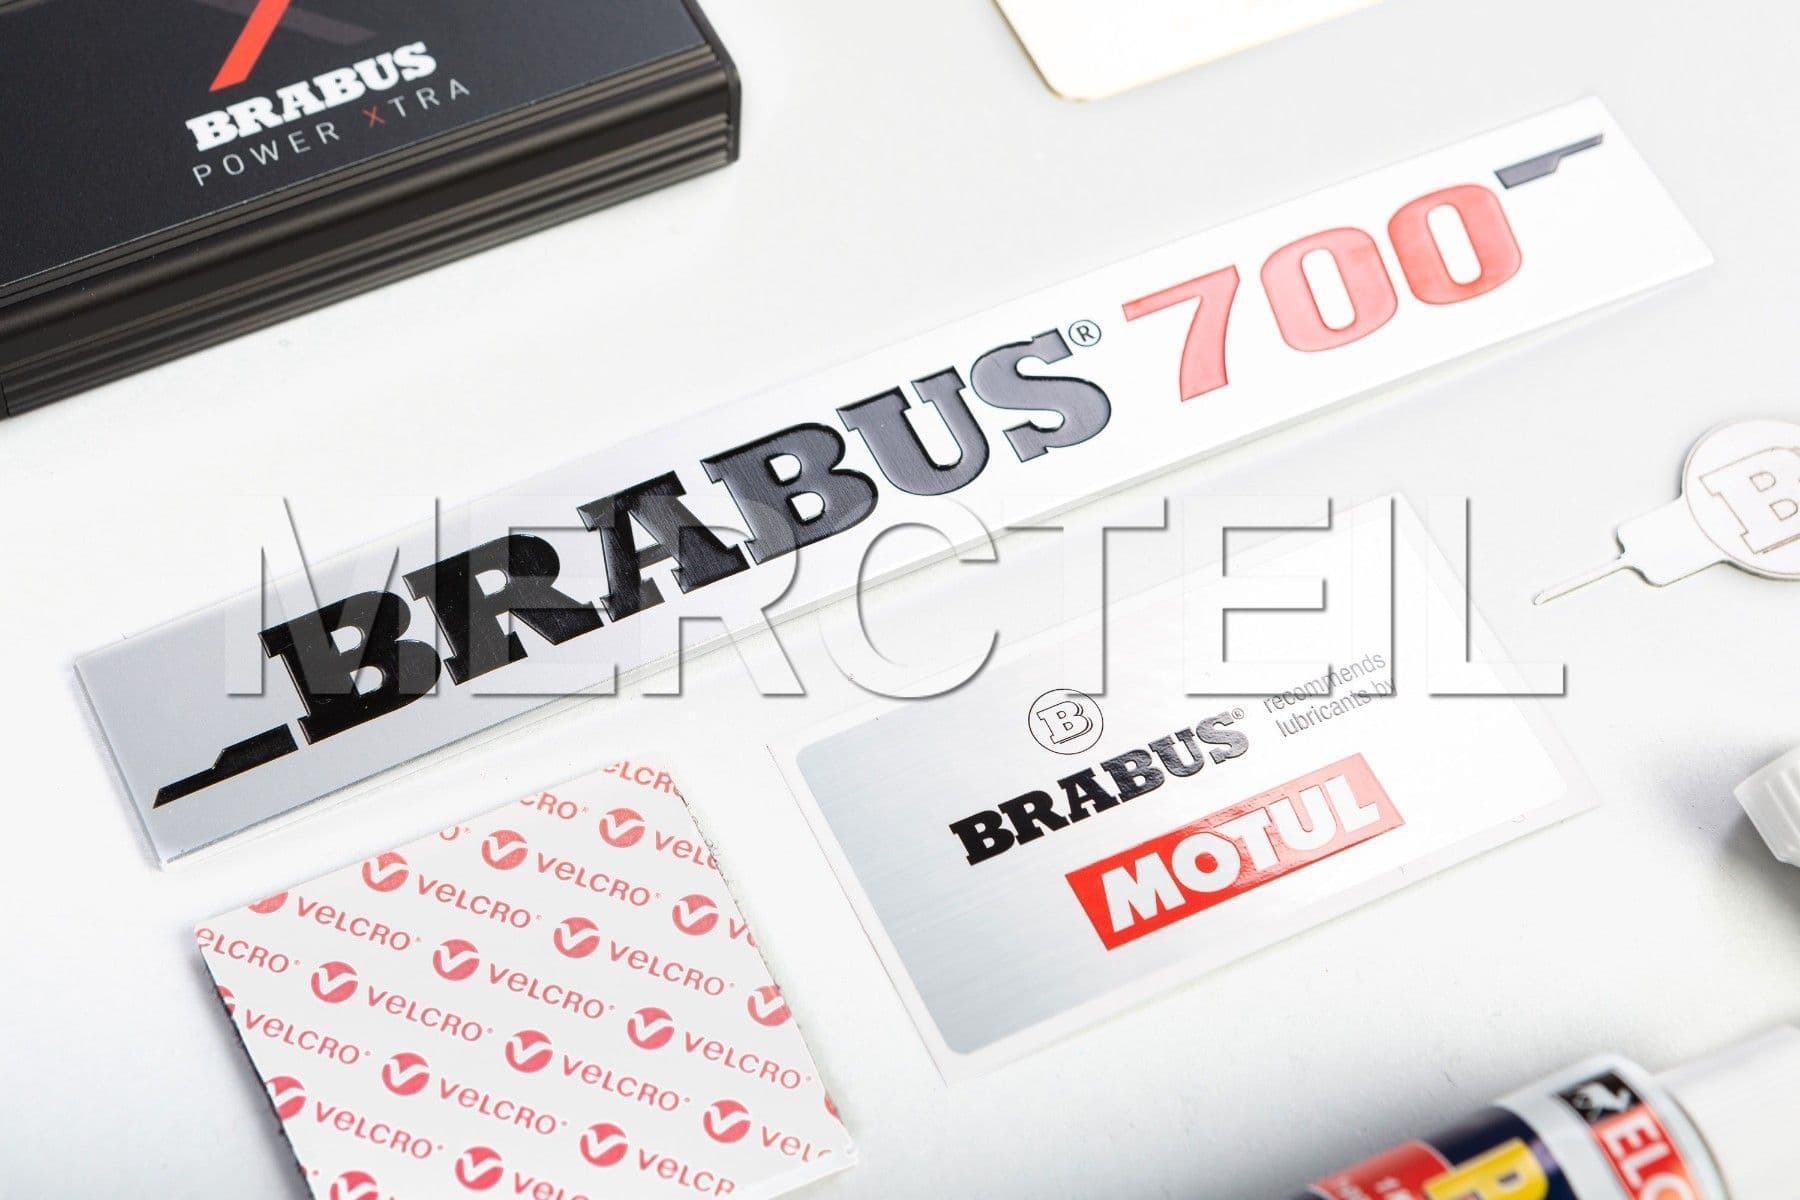 BRABUS 700 S Class PowerXtra B40 Vmax 186 mph Genuine BRABUS (Part number: 222-B40-700-00-300)